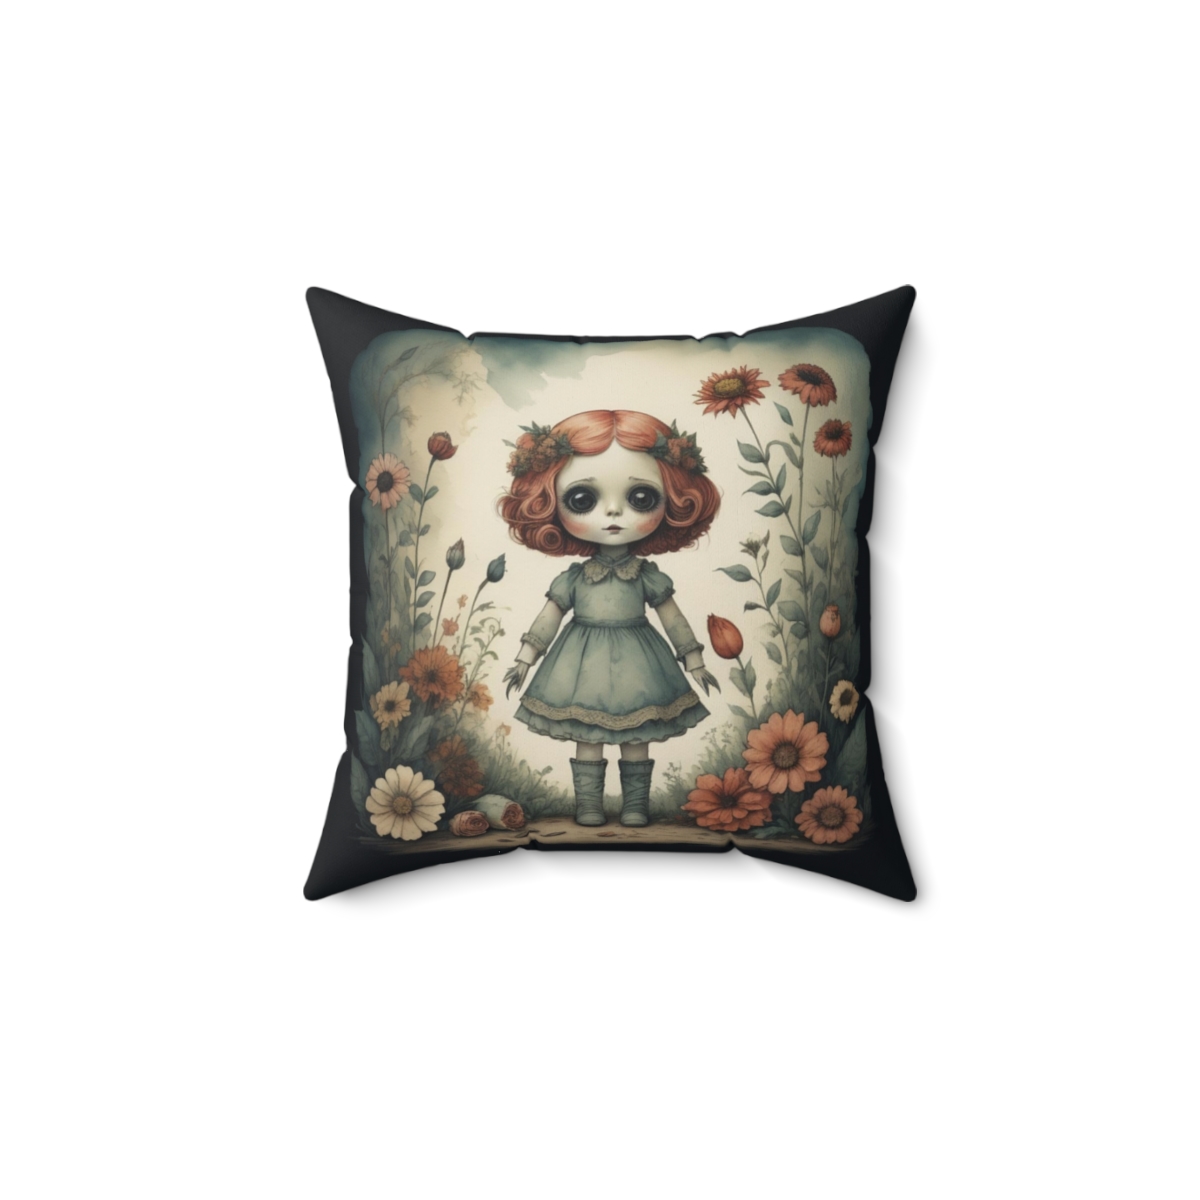 "Creepy Doll Garden" 14" Spun Polyester Square Pillow product thumbnail image